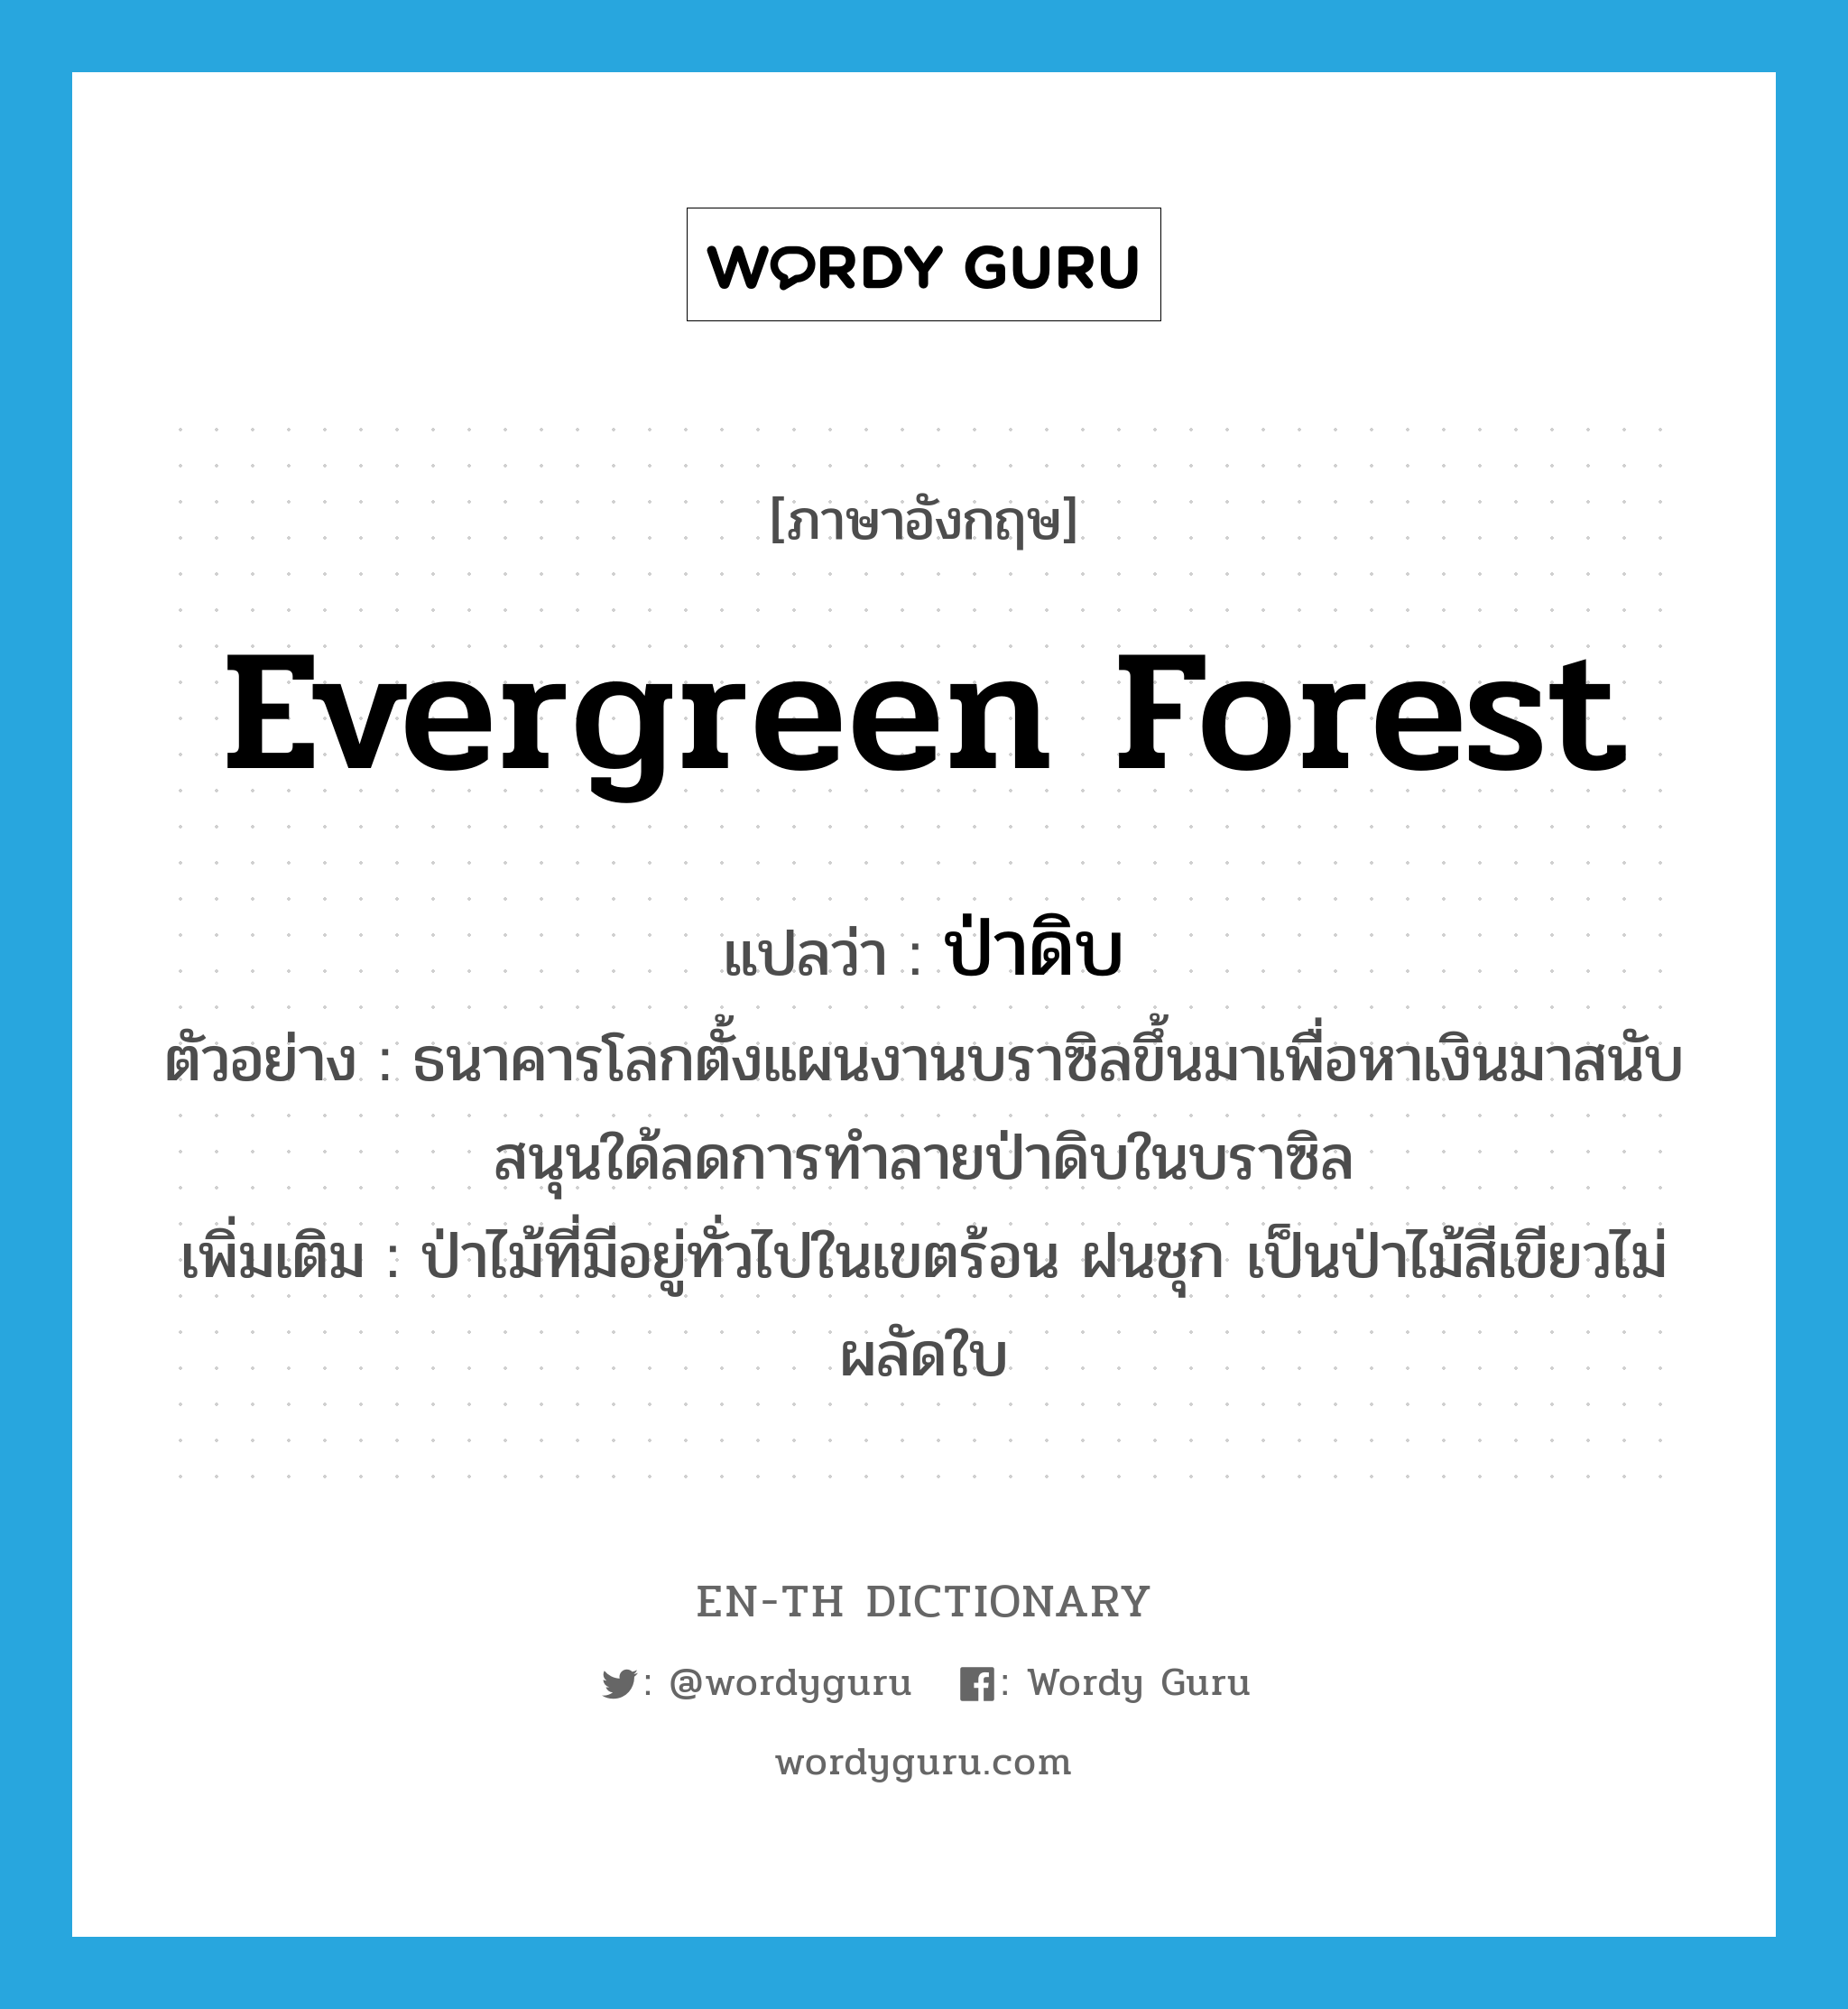 evergreen forest แปลว่า?, คำศัพท์ภาษาอังกฤษ evergreen forest แปลว่า ป่าดิบ ประเภท N ตัวอย่าง ธนาคารโลกตั้งแผนงานบราซิลขึ้นมาเพื่อหาเงินมาสนับสนุนใด้ลดการทำลายป่าดิบในบราซิล เพิ่มเติม ป่าไม้ที่มีอยู่ทั่วไปในเขตร้อน ฝนชุก เป็นป่าไม้สีเขียวไม่ผลัดใบ หมวด N